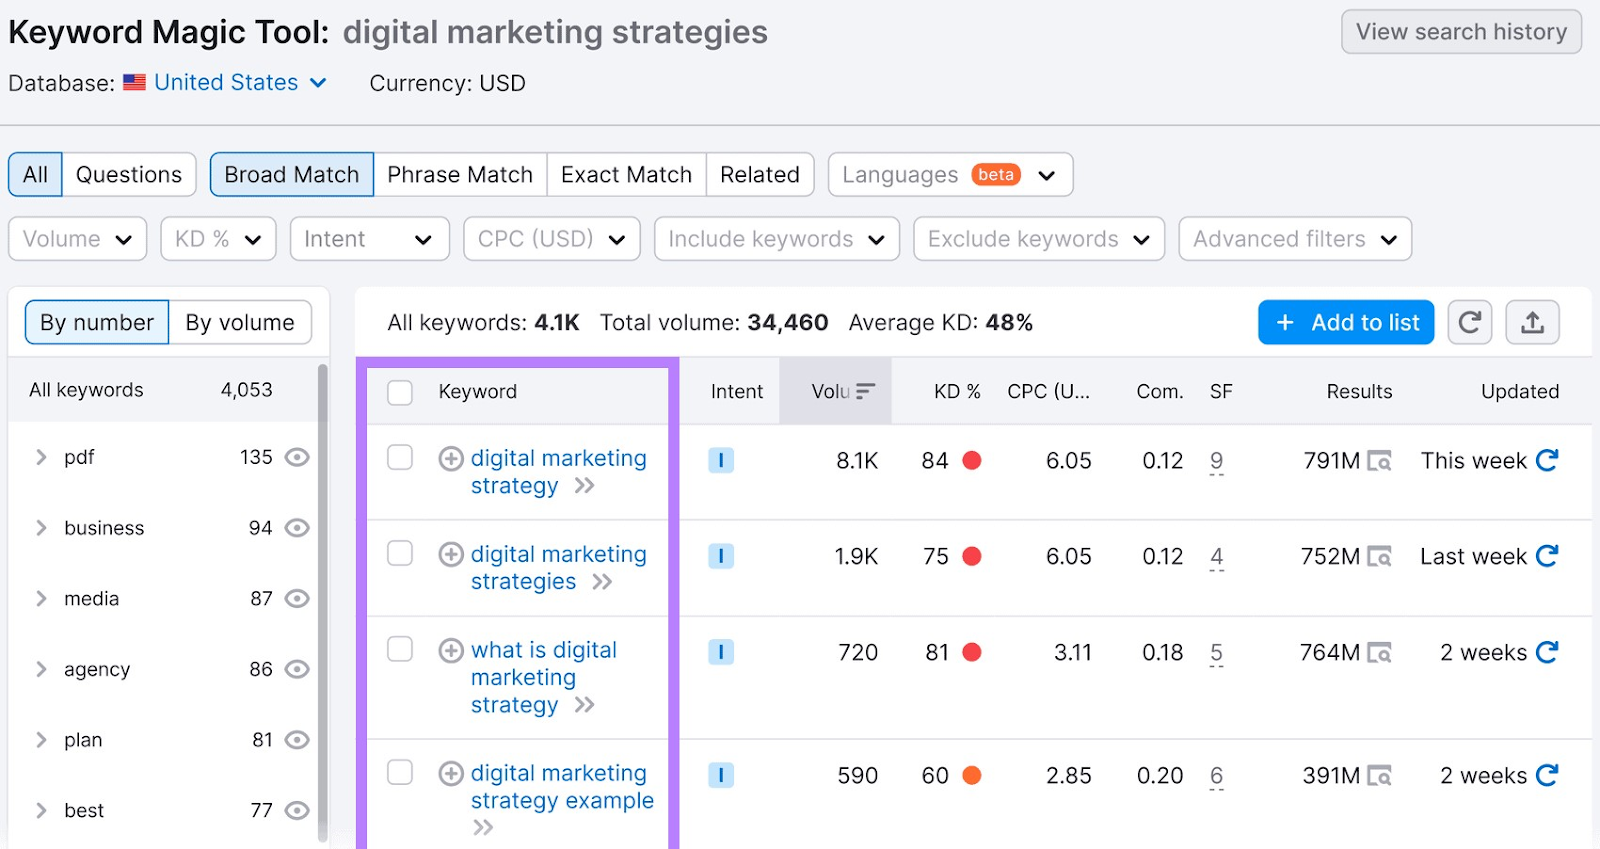 Keyword Magic Tool results for “digital marketing strategies”